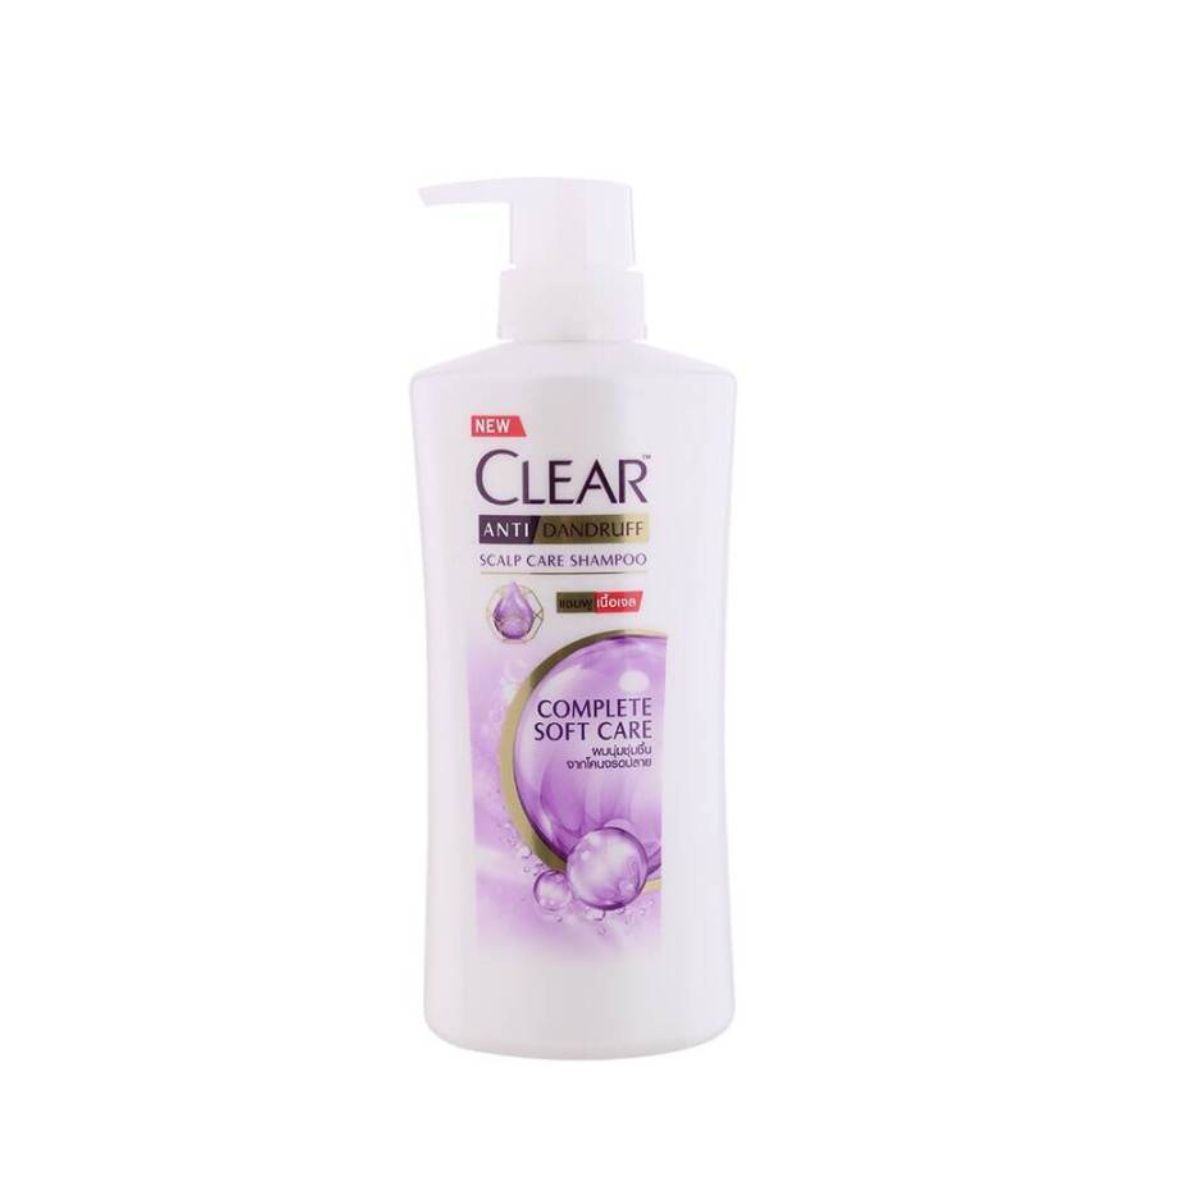 Clear Anti Dandruff Shampoo Scalp Care Shampoo - Complete Soft Care - 435ml